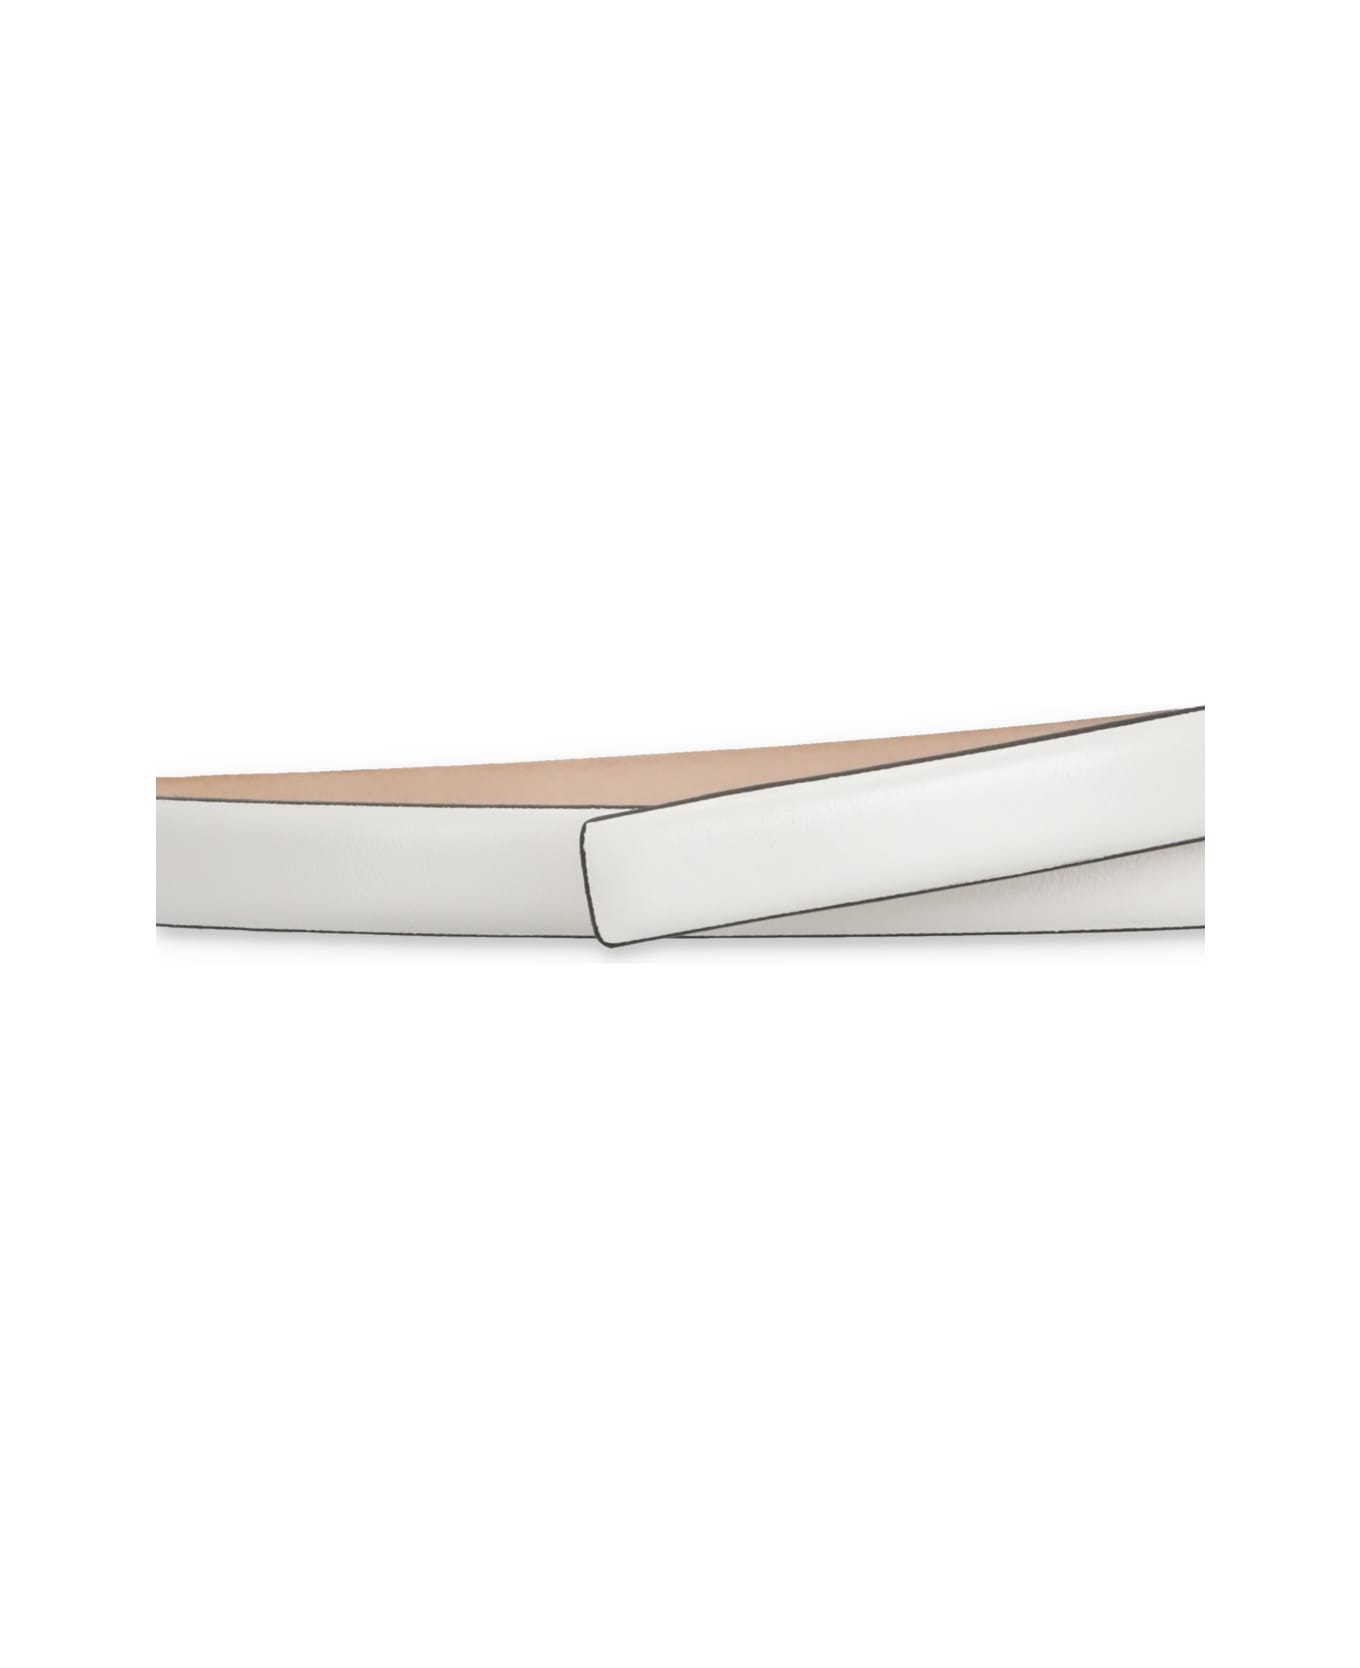 Moschino Leather Belt - White ベルト